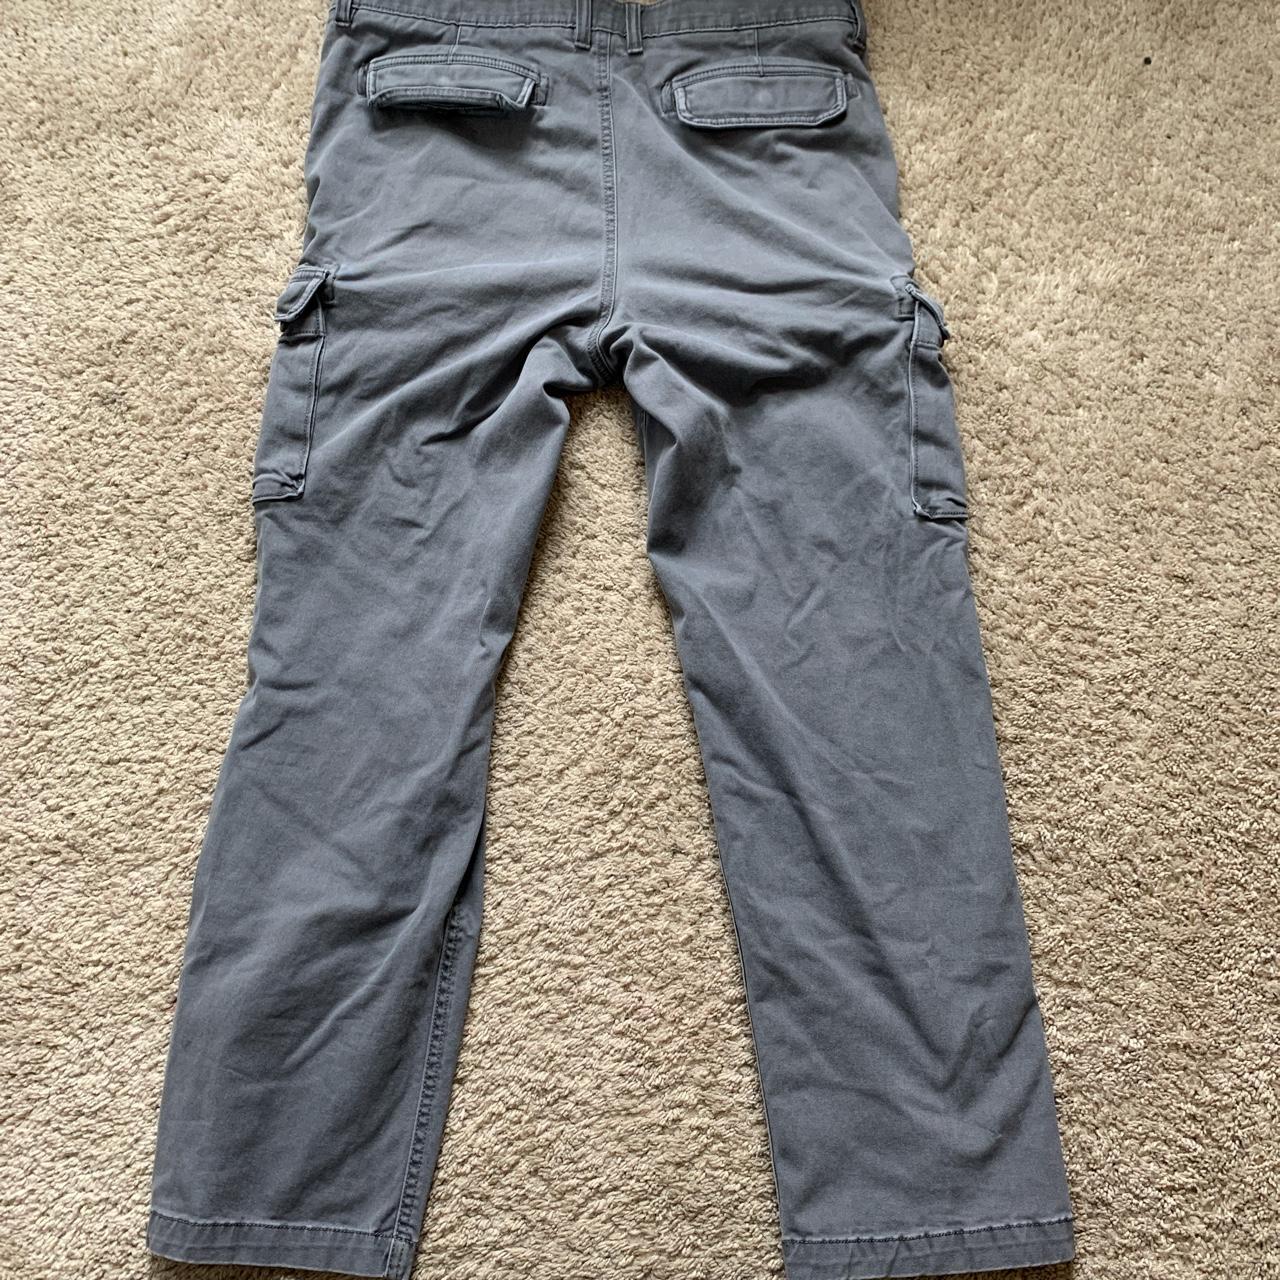 Grey sonoma cargo pants flex wear slim straight leg